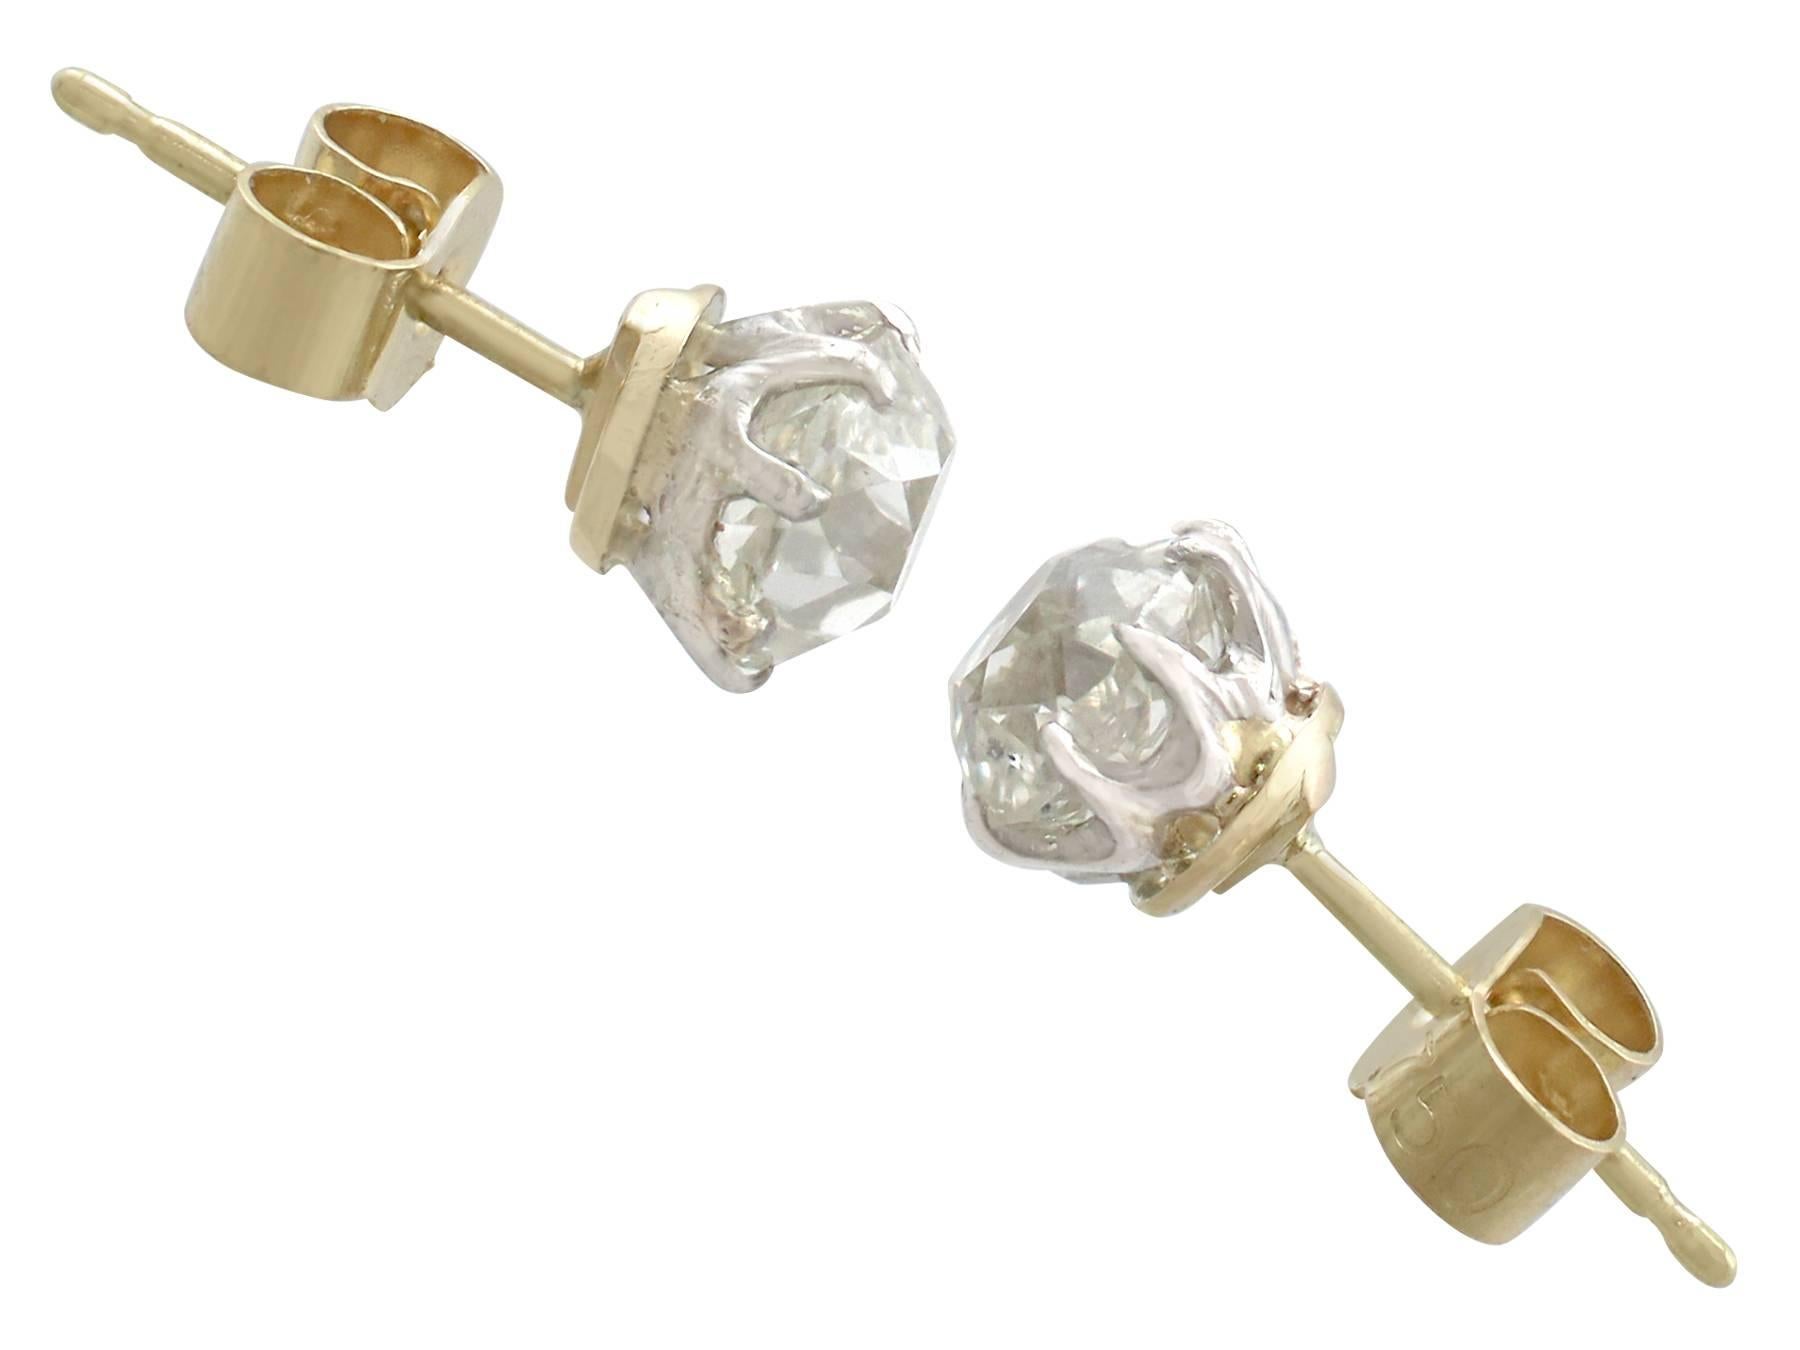 0.2 carat diamond earrings